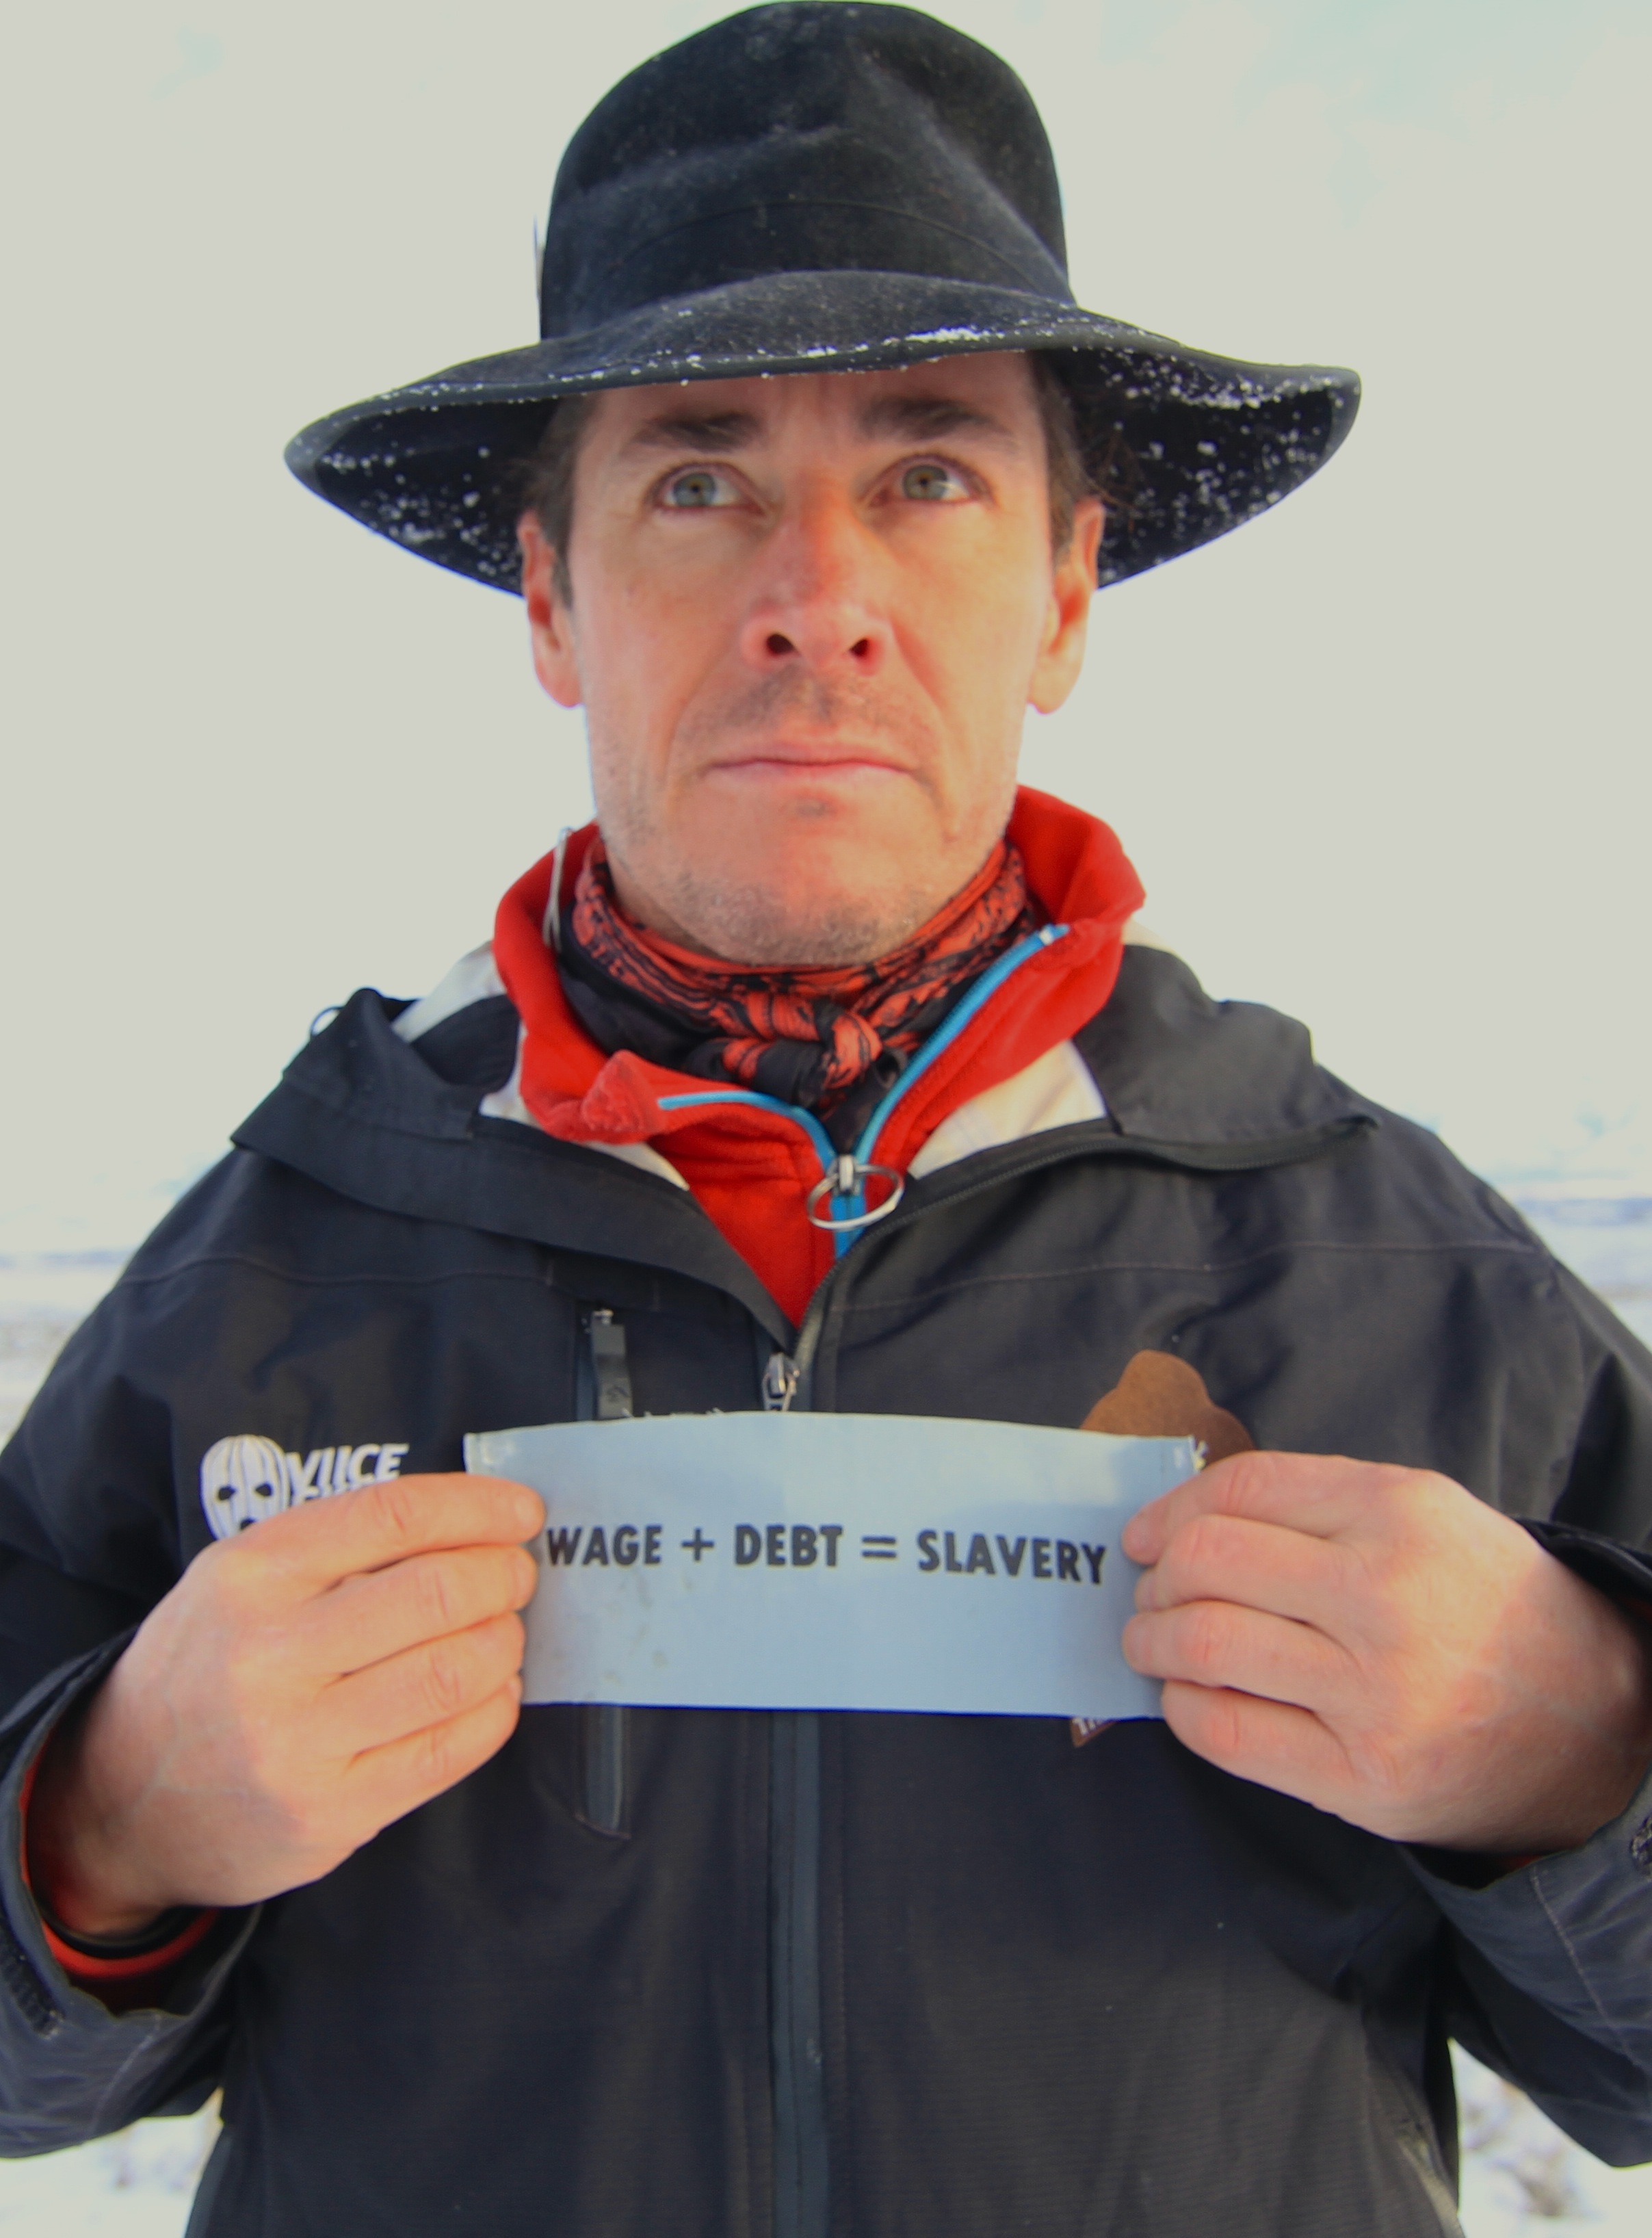 Sponsored ski athlete, Viiceskis.com 'wage+debt=slavery'